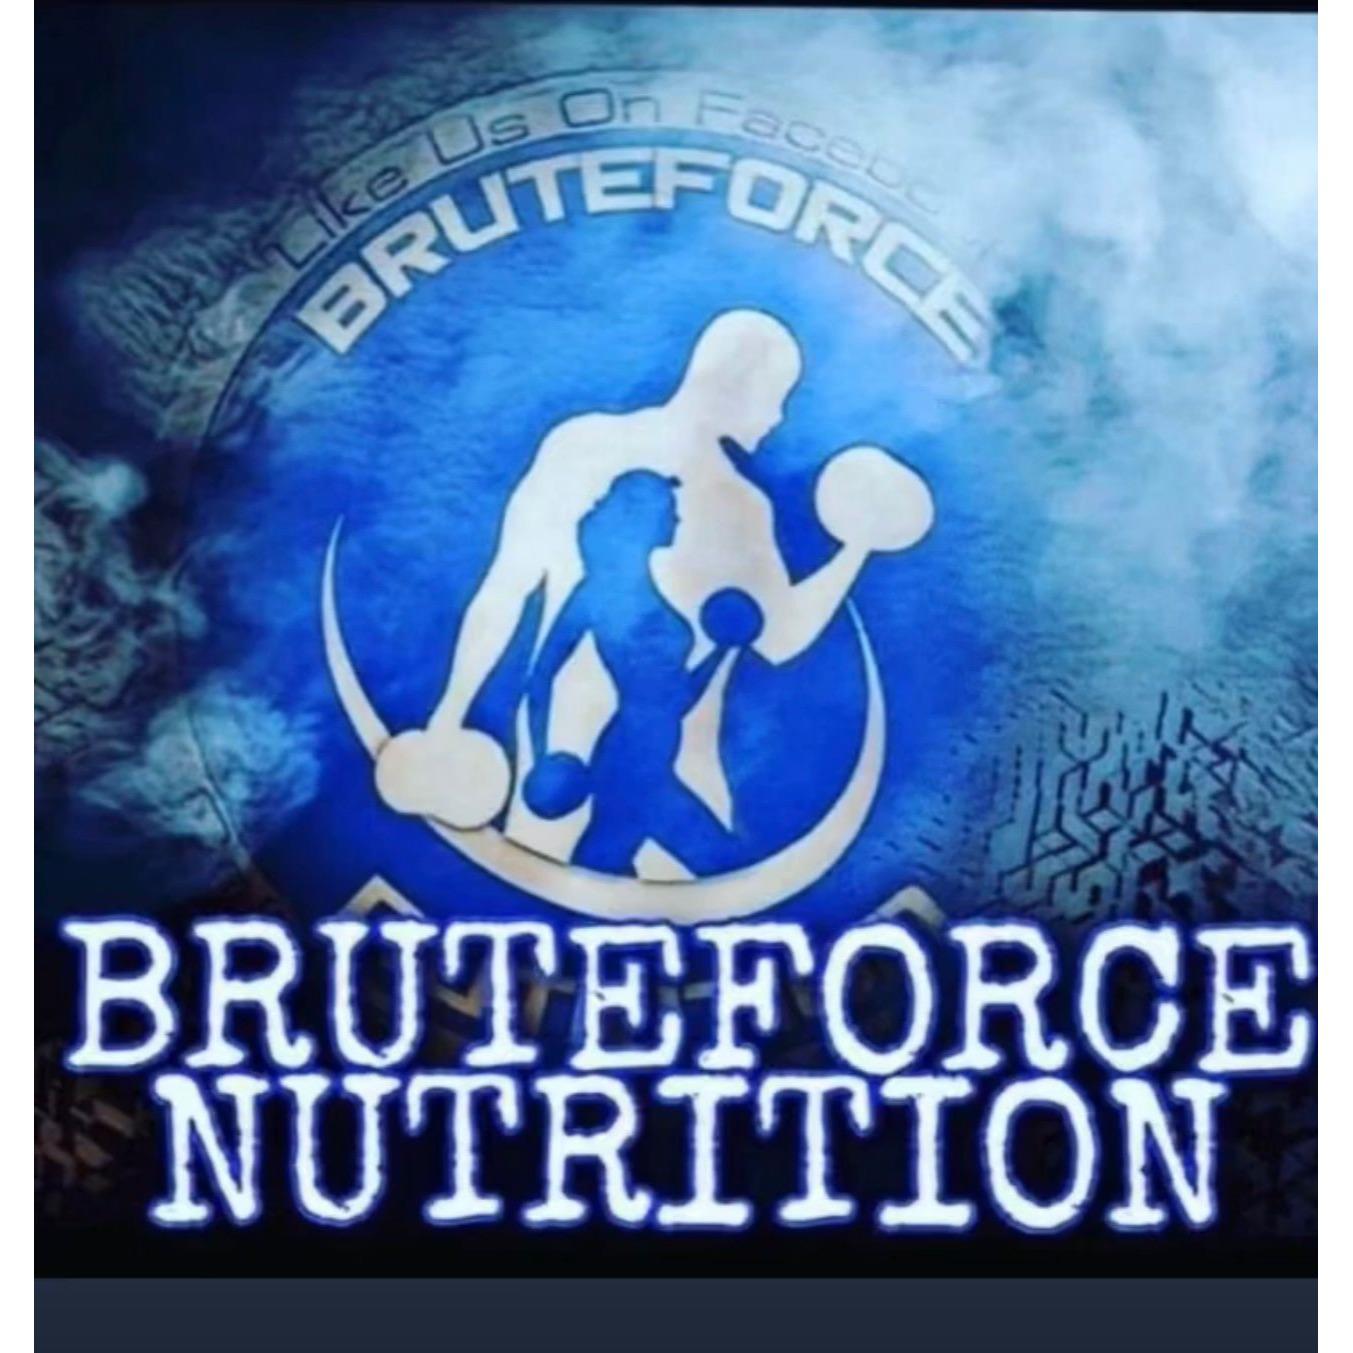 Bruteforce Nutrition - Nutritionist - Dublin - 085 184 4178 Ireland | ShowMeLocal.com